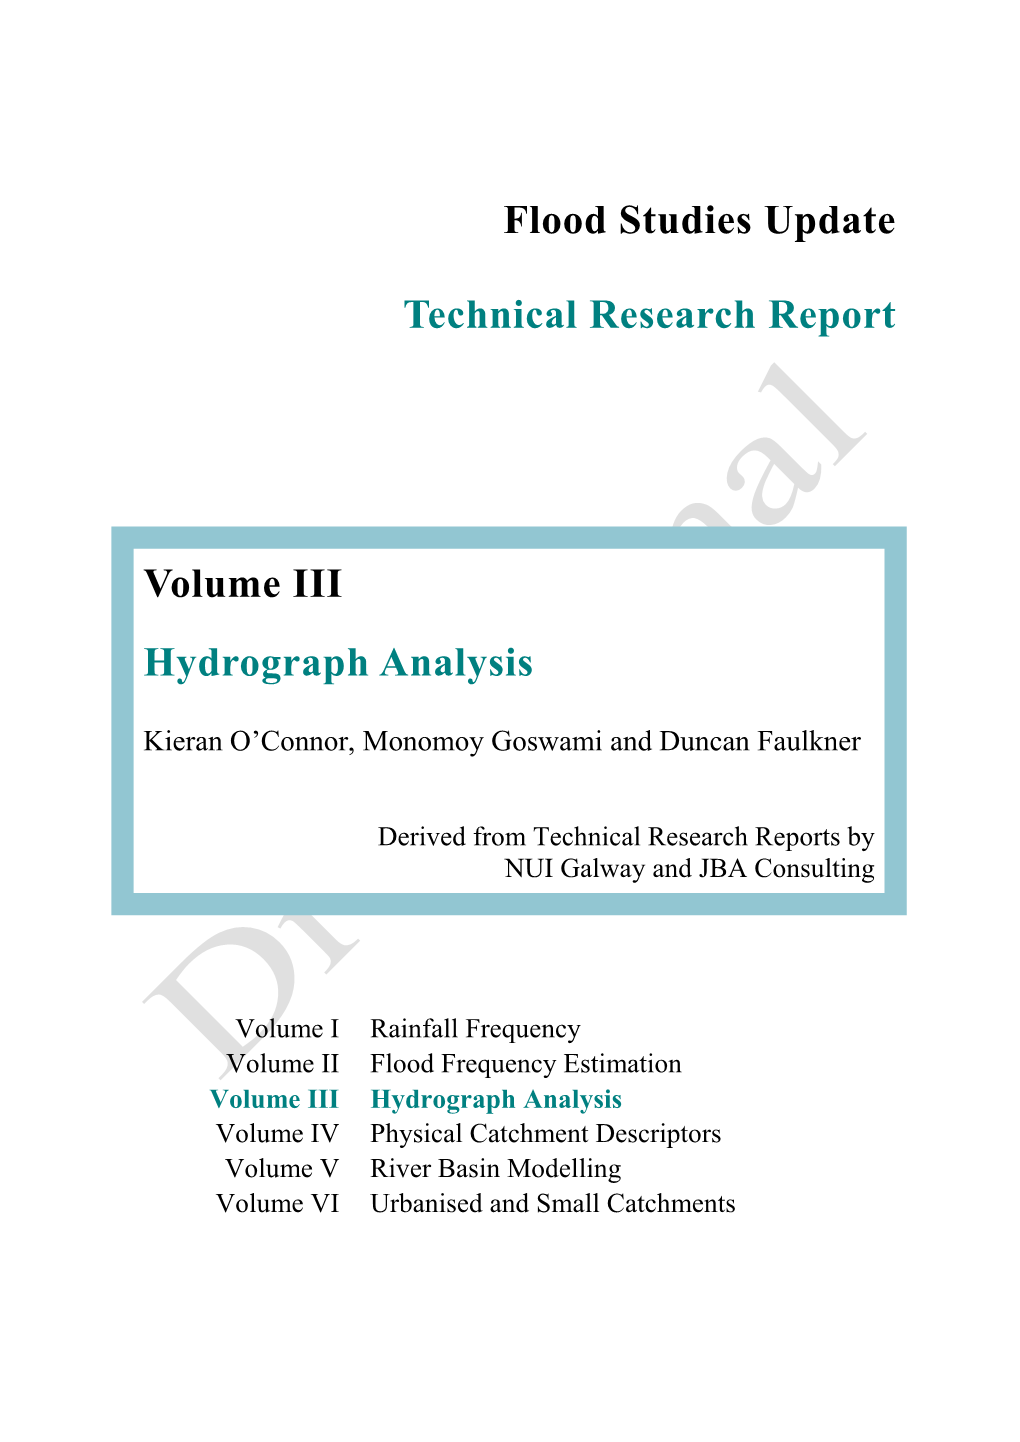 Flood Studies Update Technical Research Report Volume III